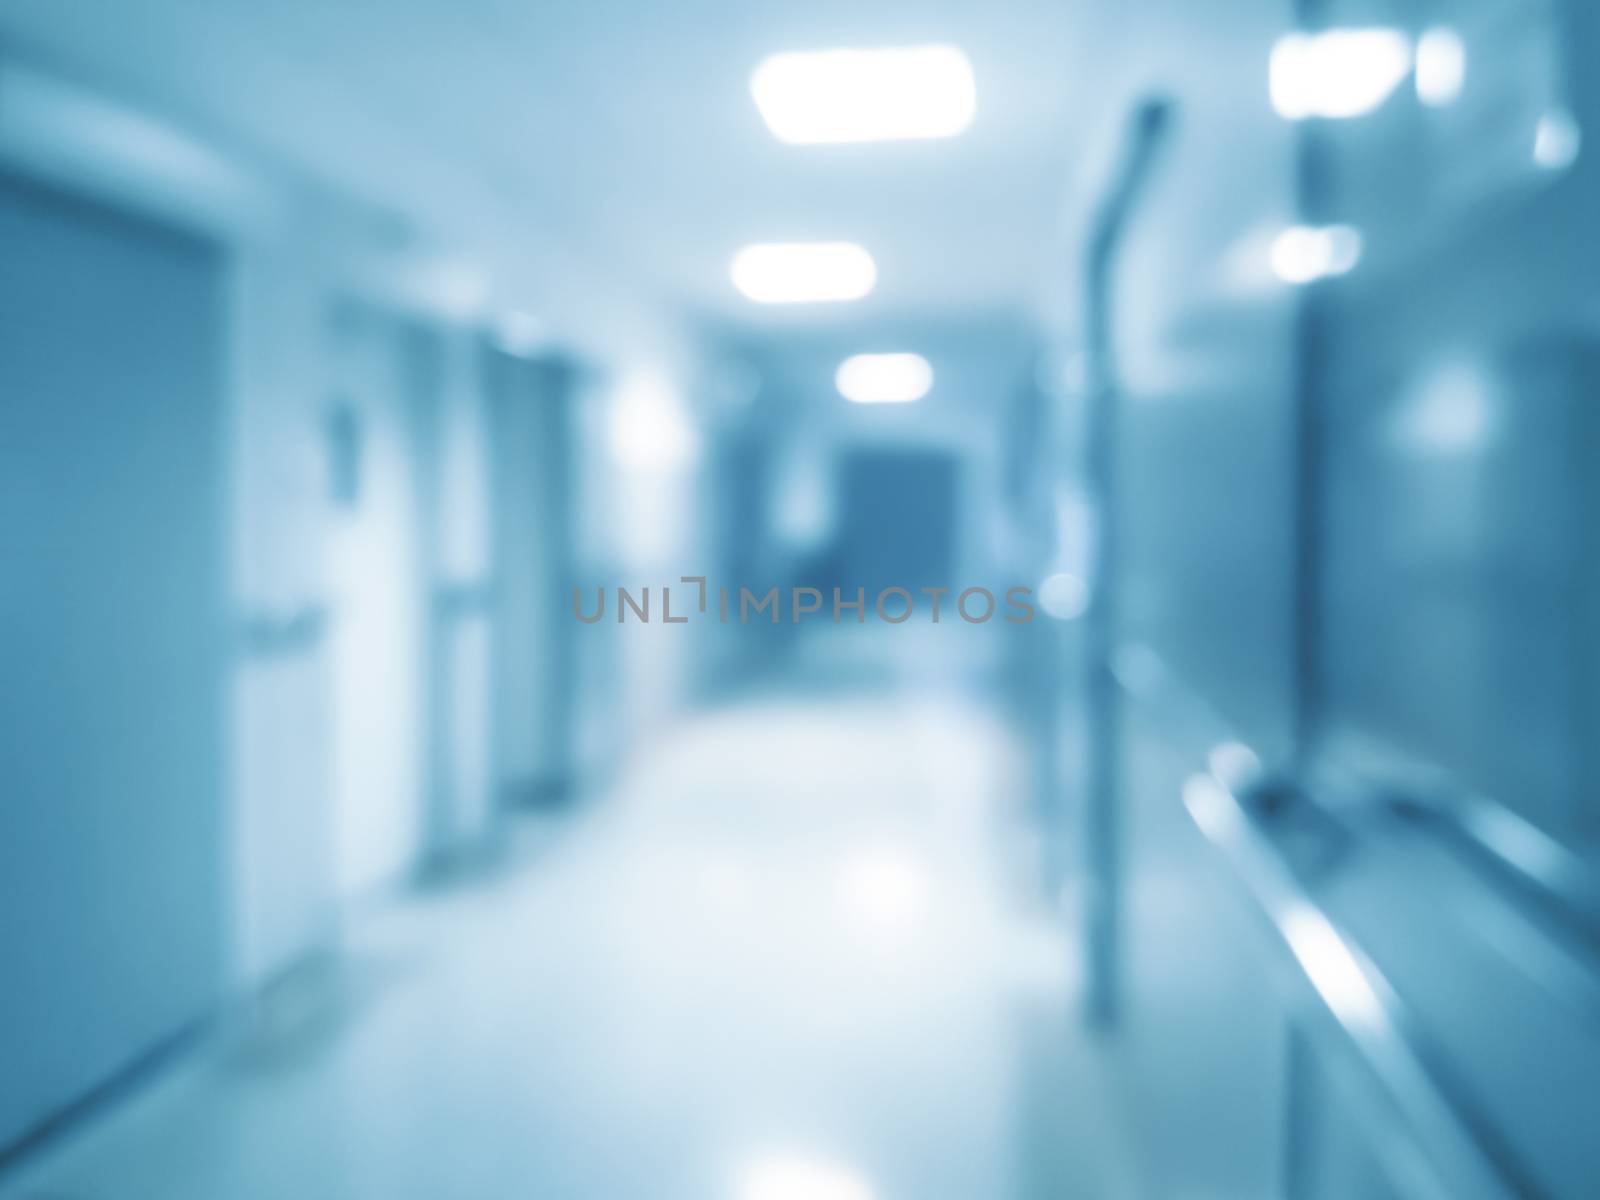 Blurred hospital corridor by wdnet_studio